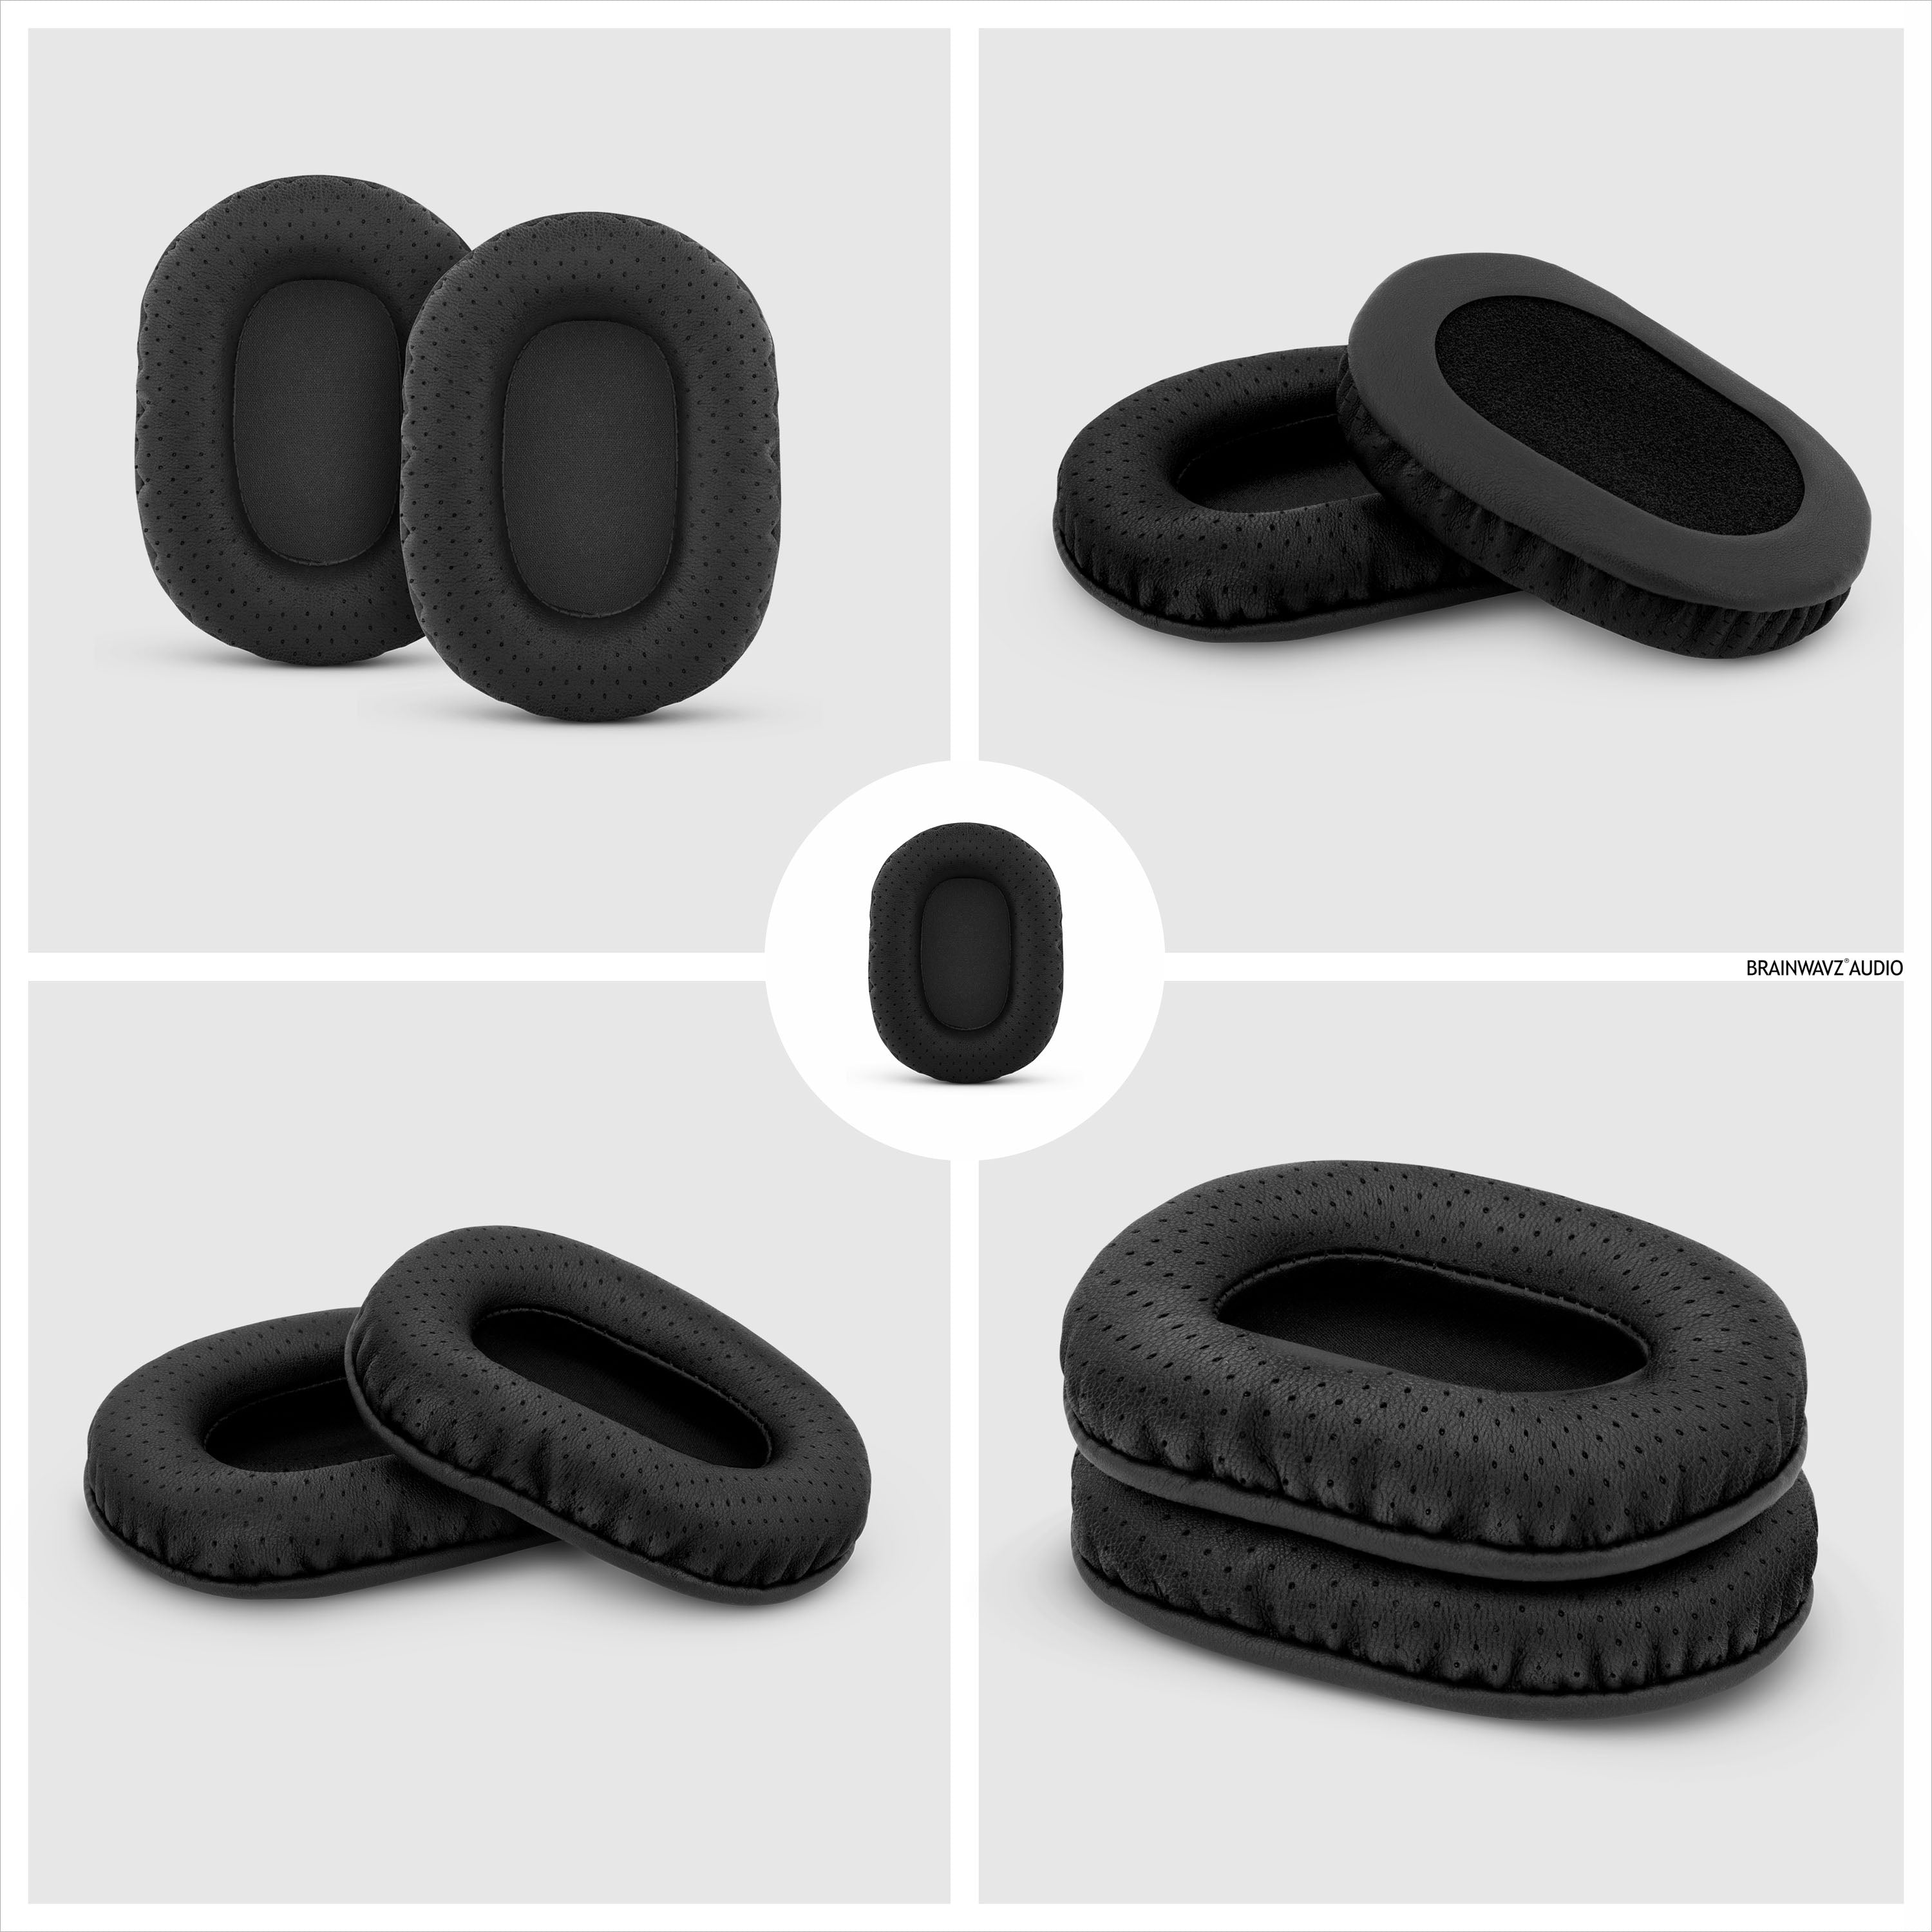 Accesorio auriculares - Almohadillas negras para auriculares Sony MDR-7506  / V6 / CD 900ST. INF, negro